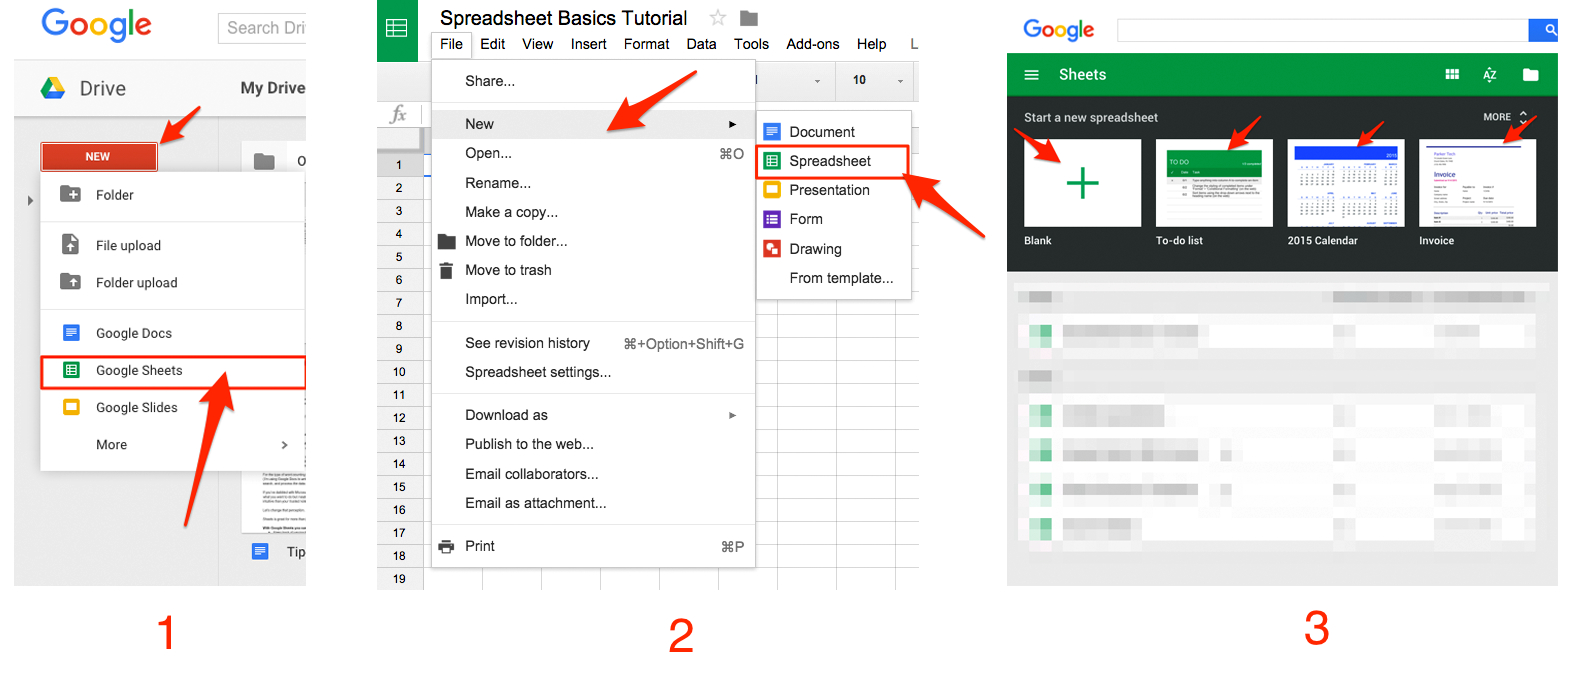 Create Spreadsheet Online For Google Sheets 101: The Beginner's Guide To Online Spreadsheets  The